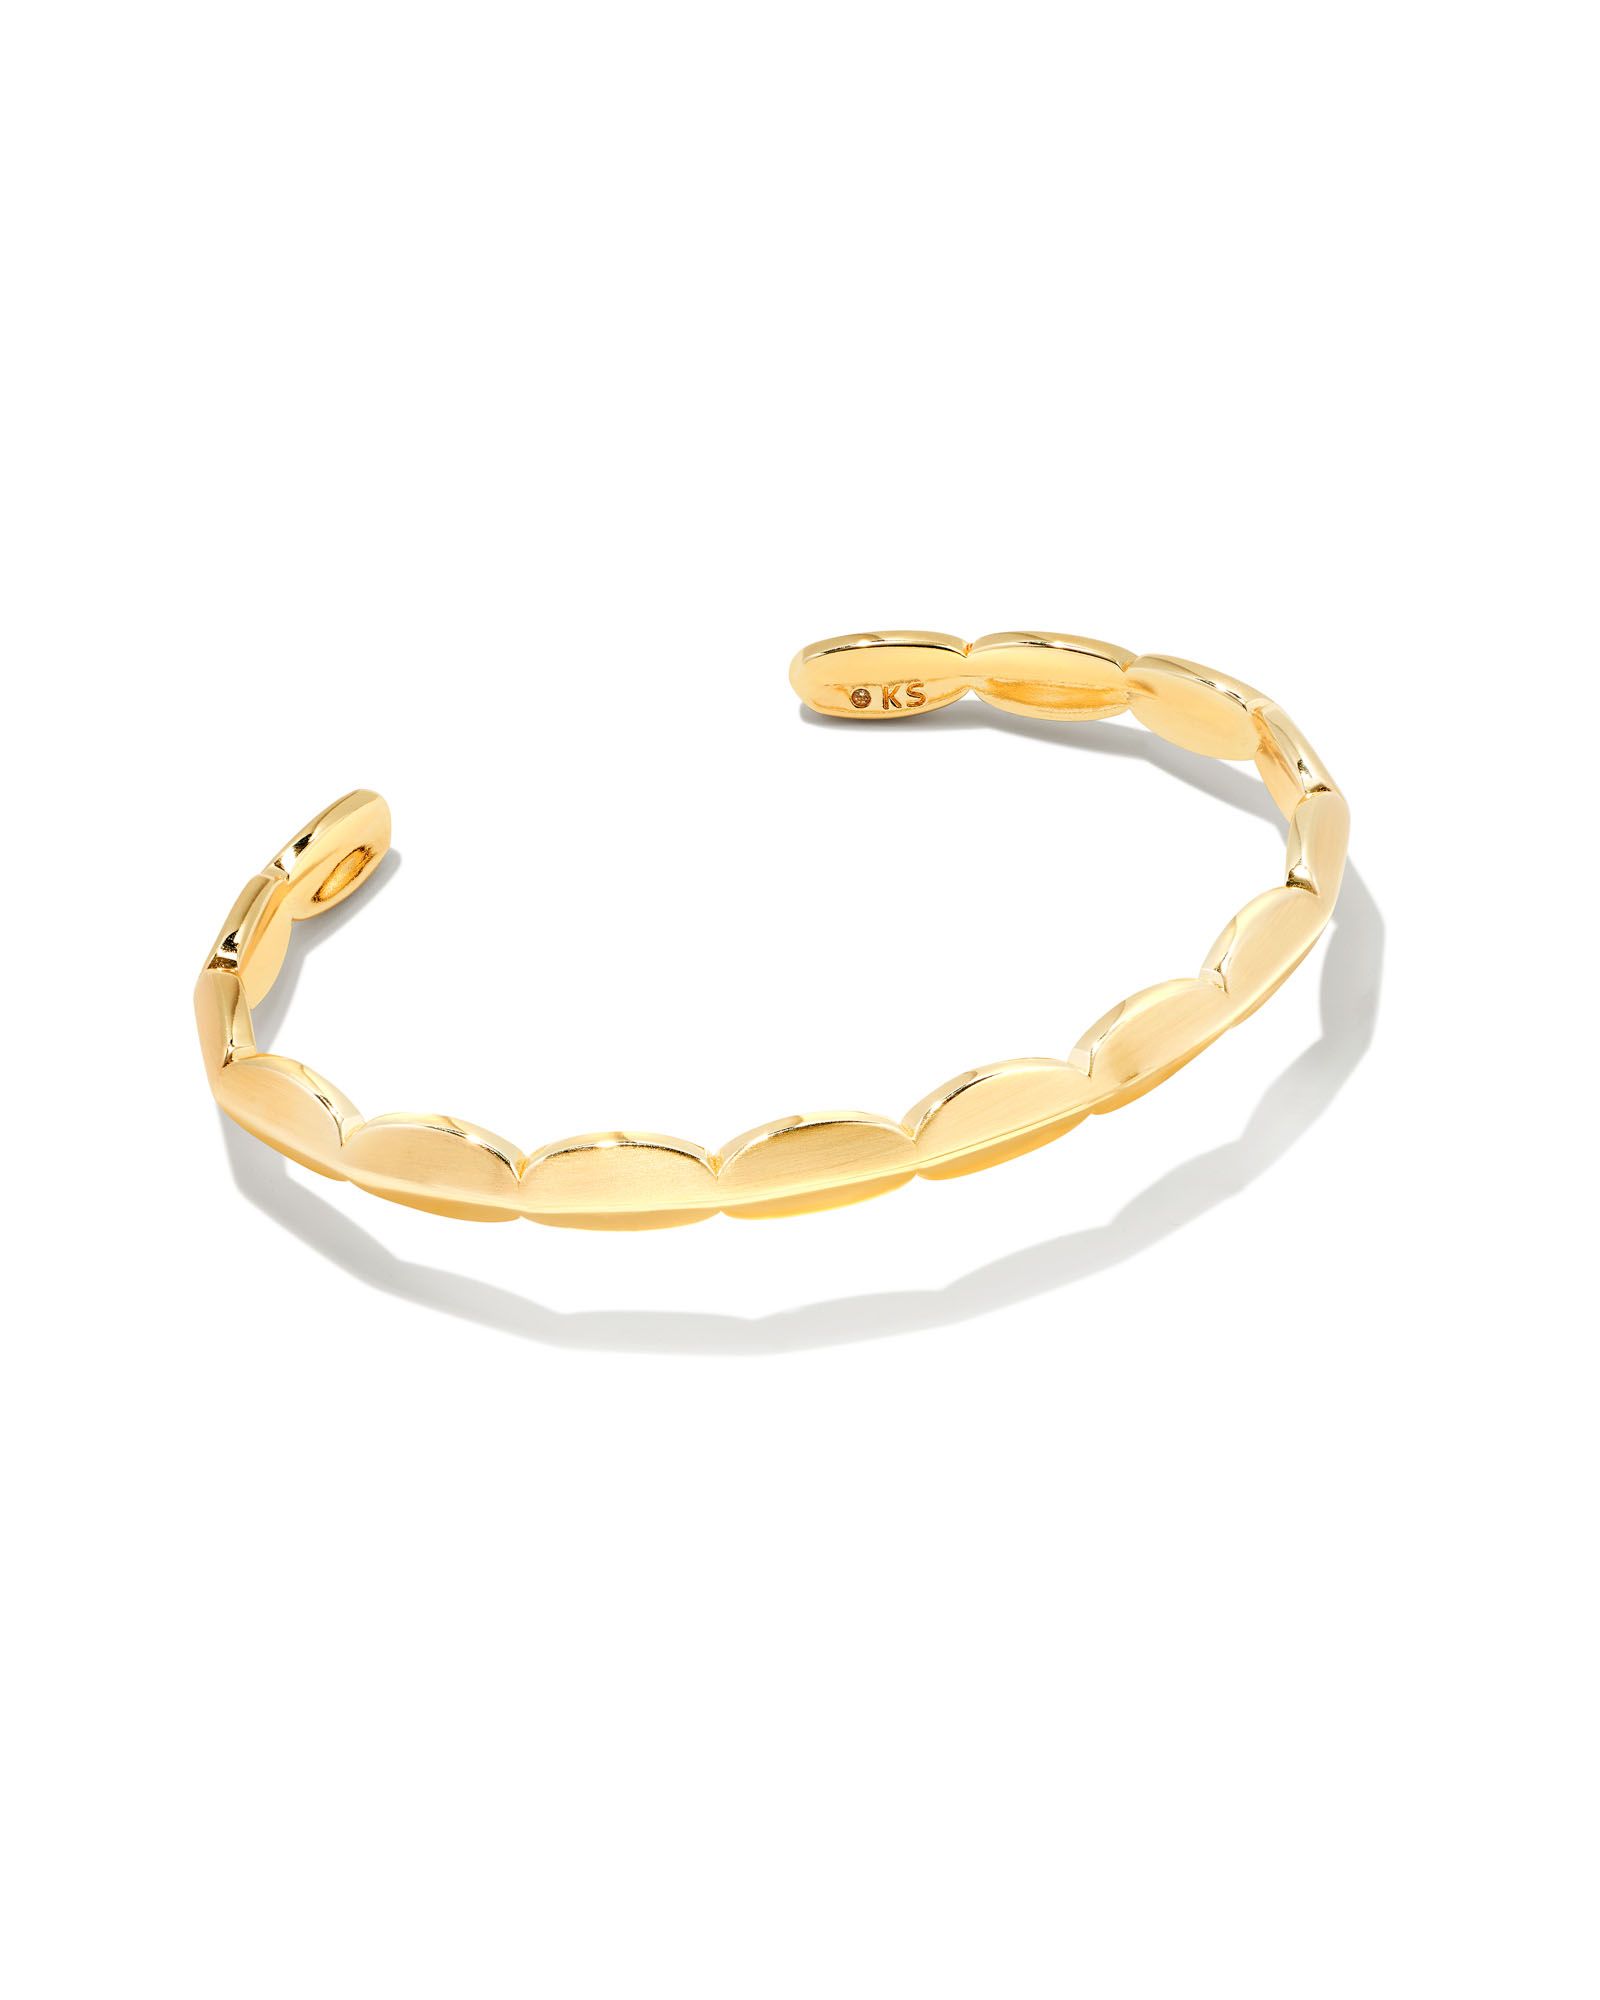 Brooke Cuff Bracelet in Gold | Kendra Scott | Kendra Scott